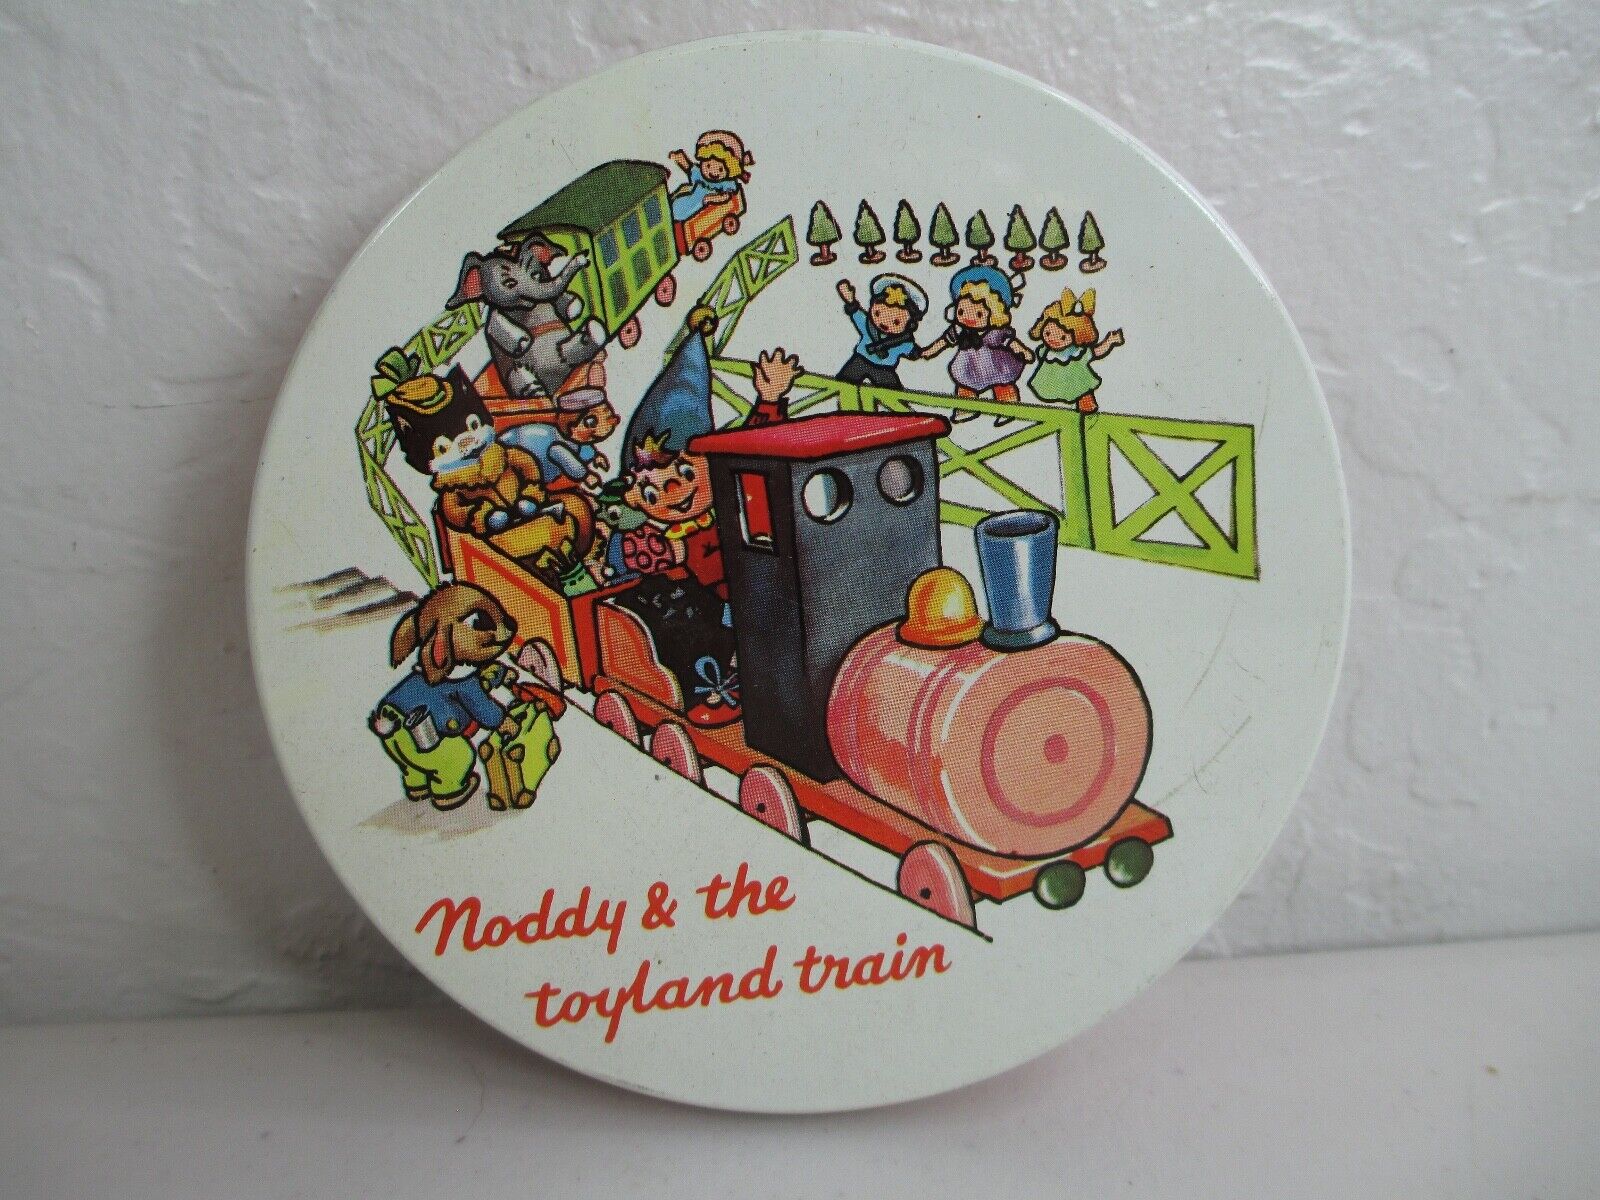 Vintage NODDY & THE TOYLAND TRAIN Huntley & Palmers Vintage Biscuit Tin